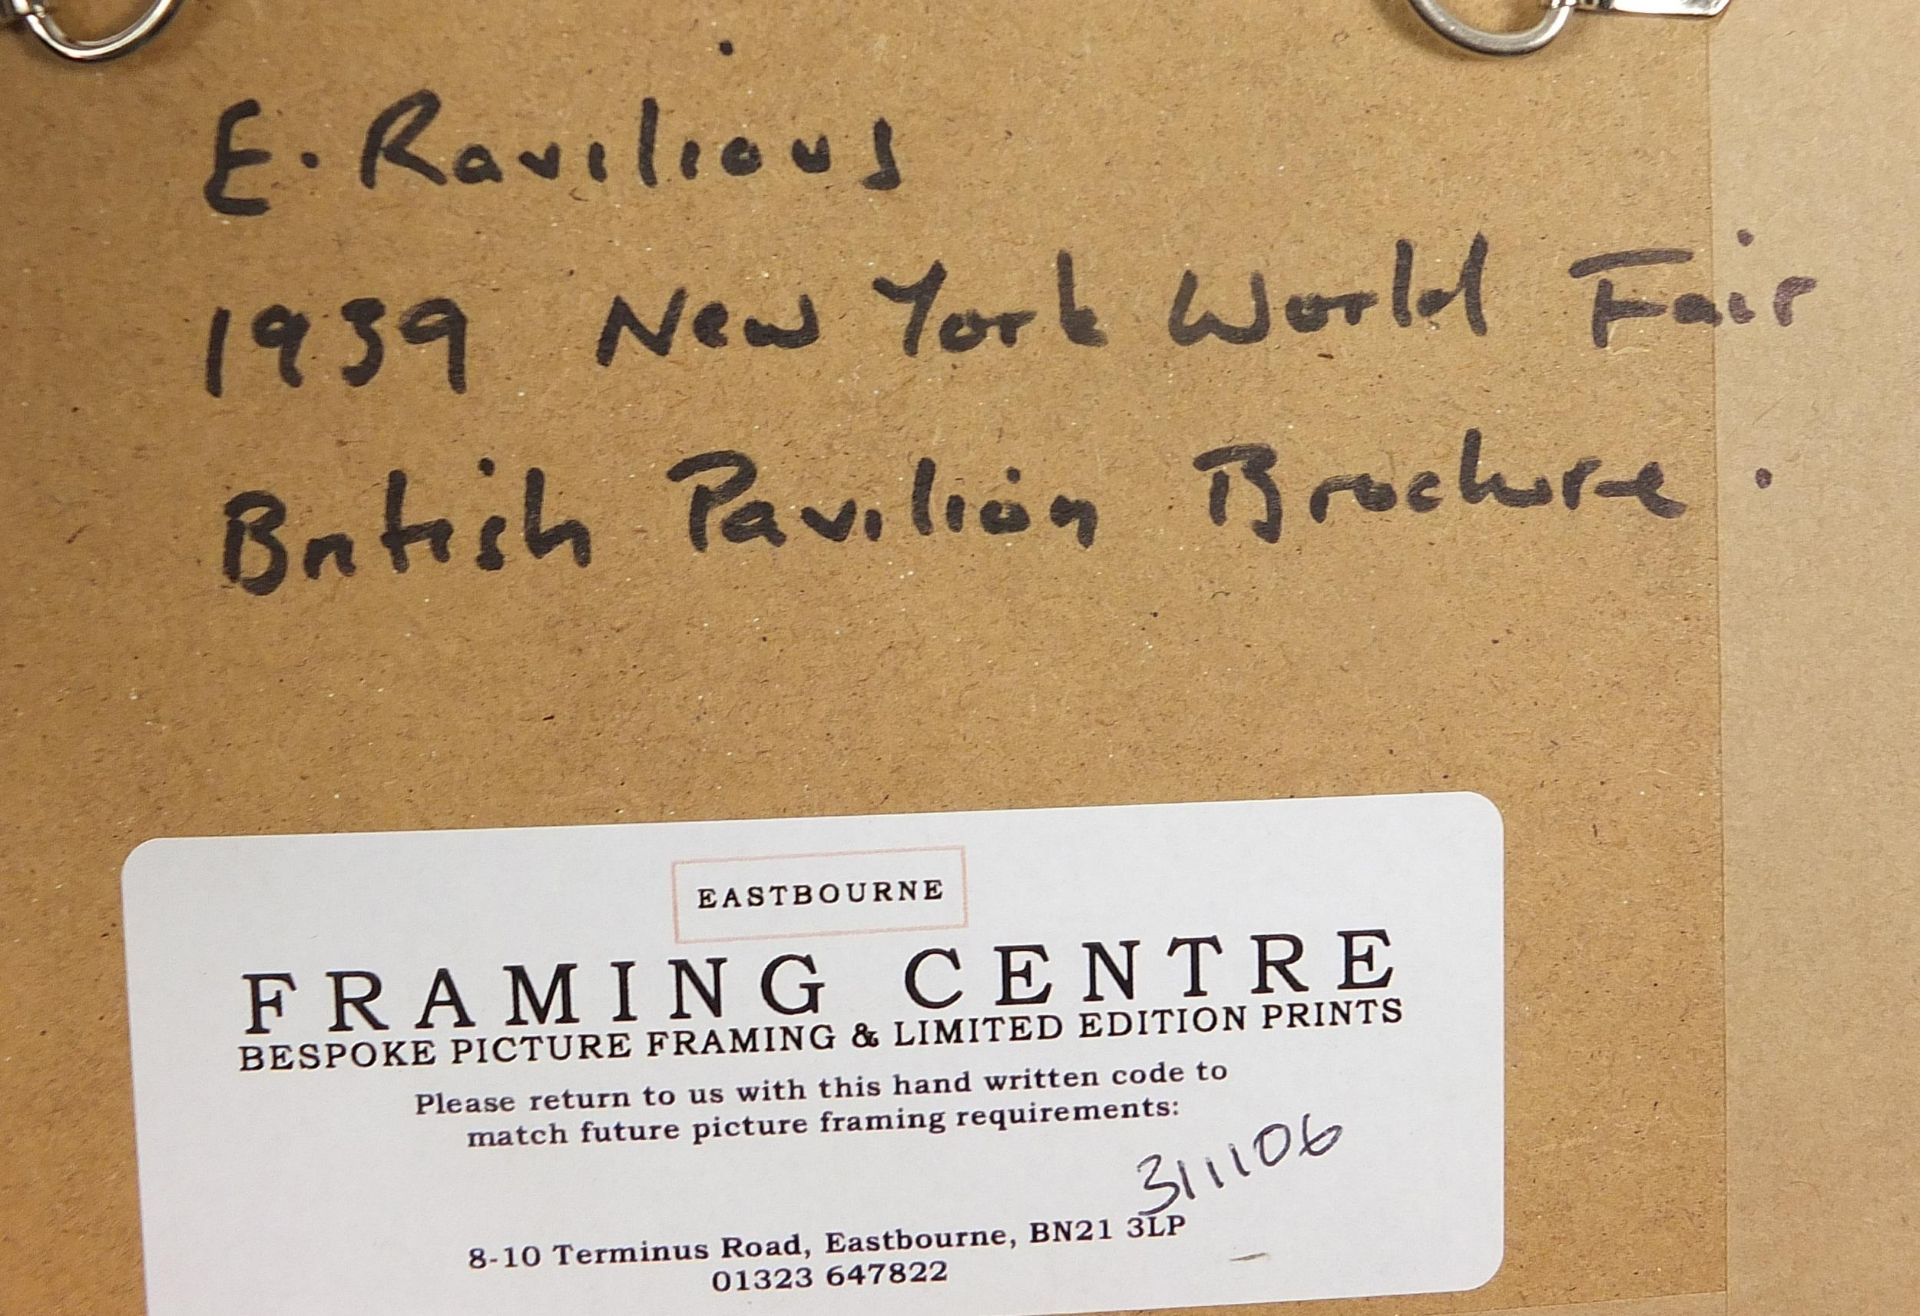 After Eric Ravilious - British Pavilion Brochure, 1939 New York World Fair print, details verso, - Bild 4 aus 4